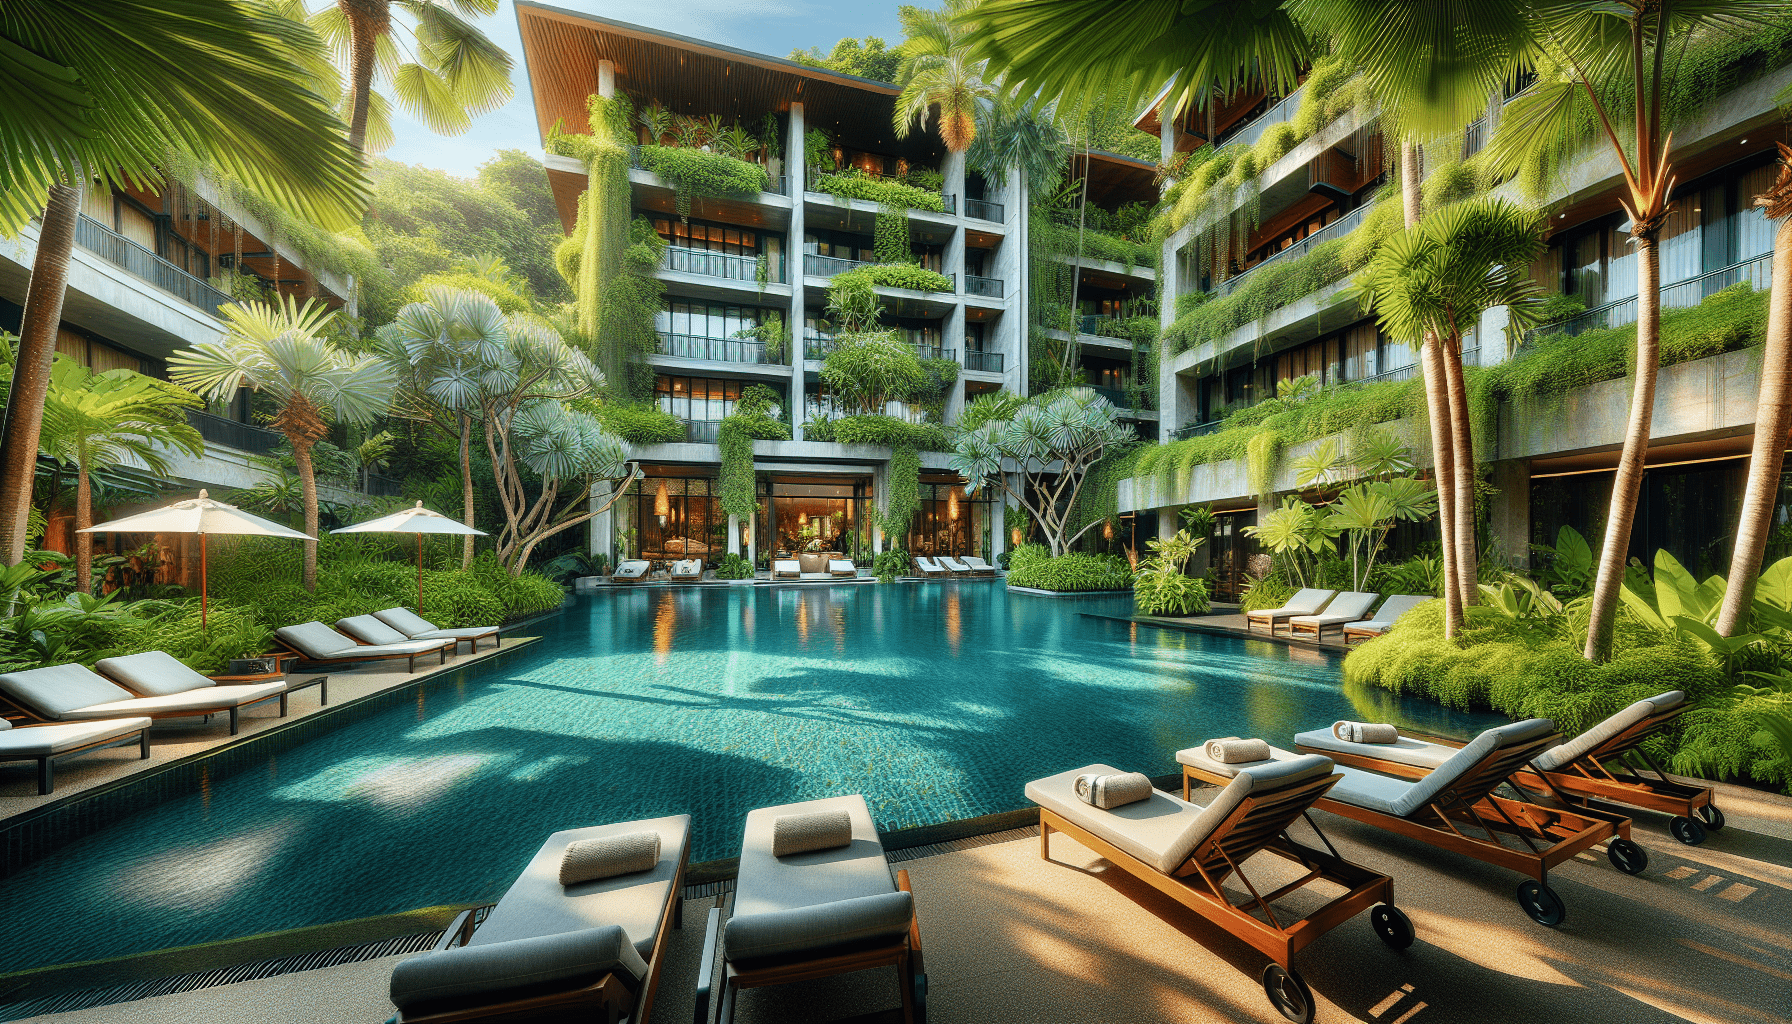 Phoenix Hotel Karon Beach – A 4-Star Retreat in Karon Beach, Thailand